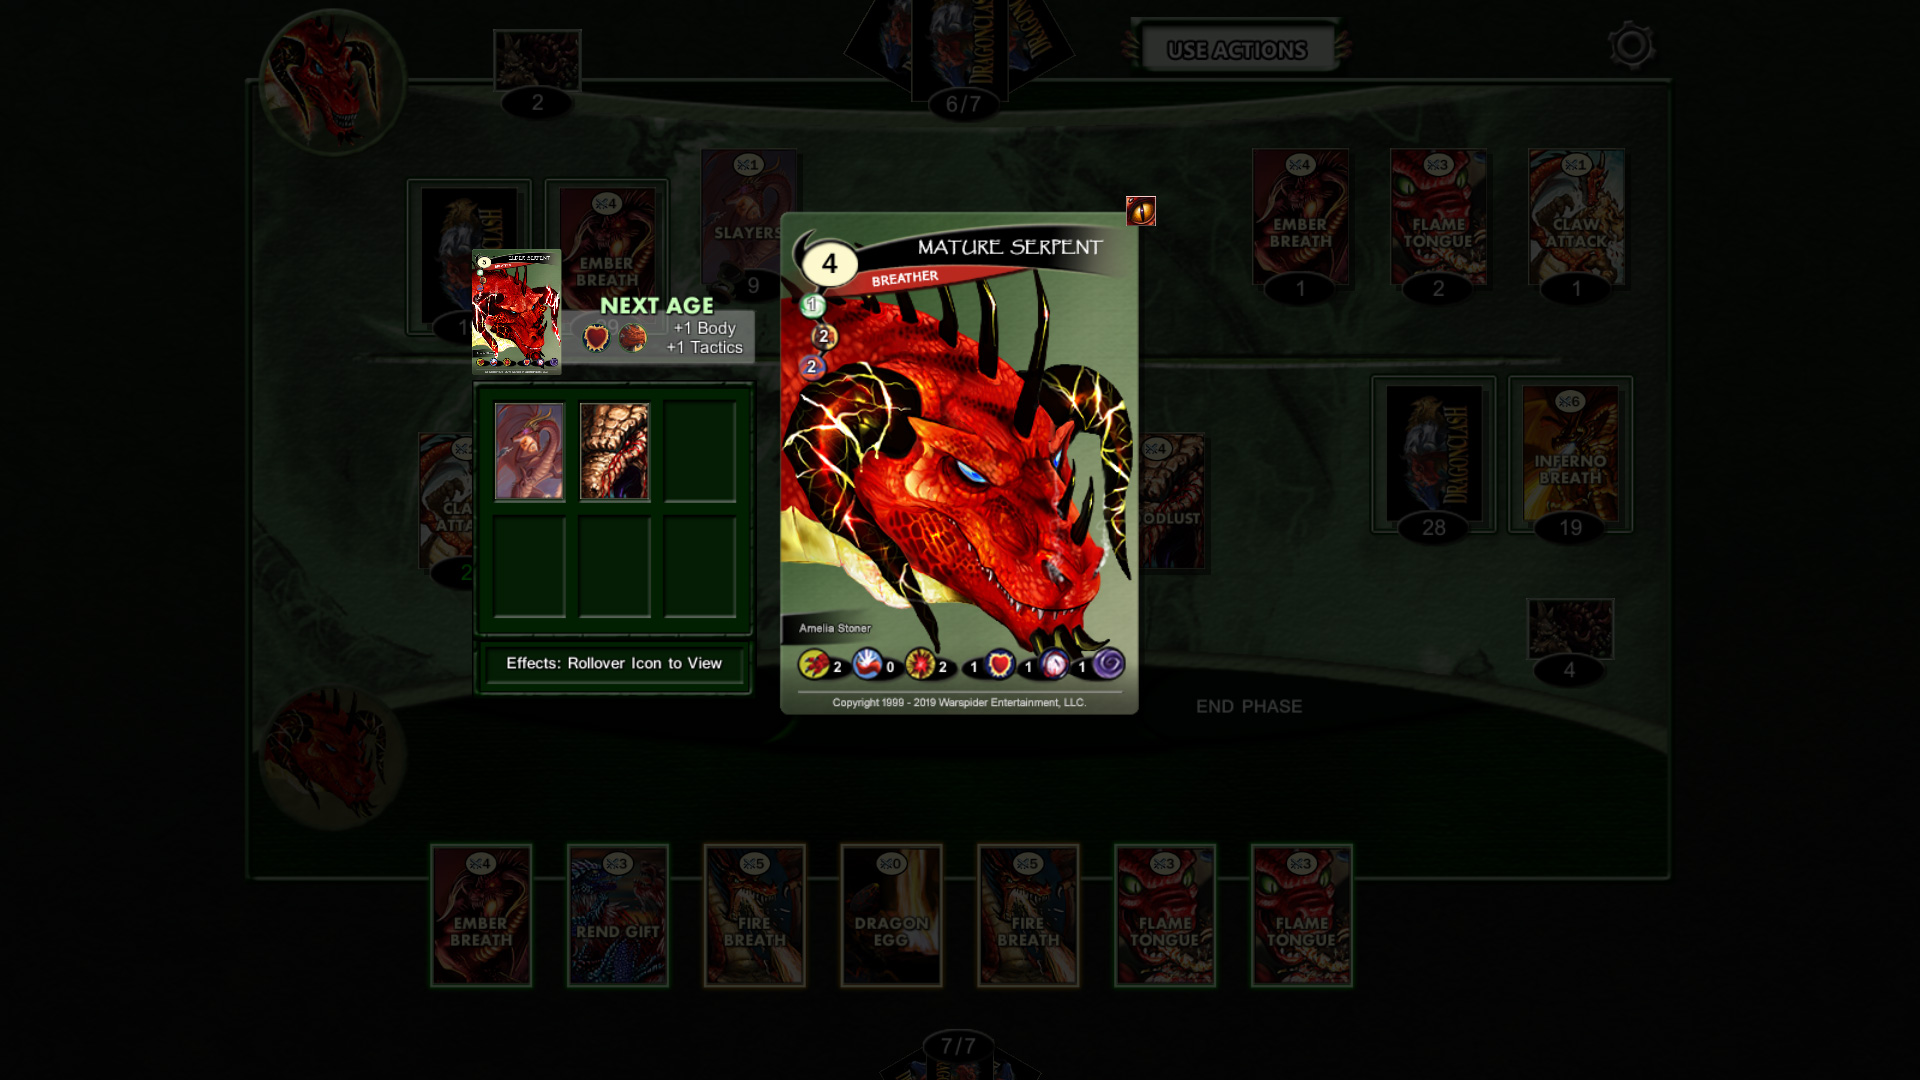 Digital DragonClash Game Screenshot - Red Breather - Mature Serpent Card